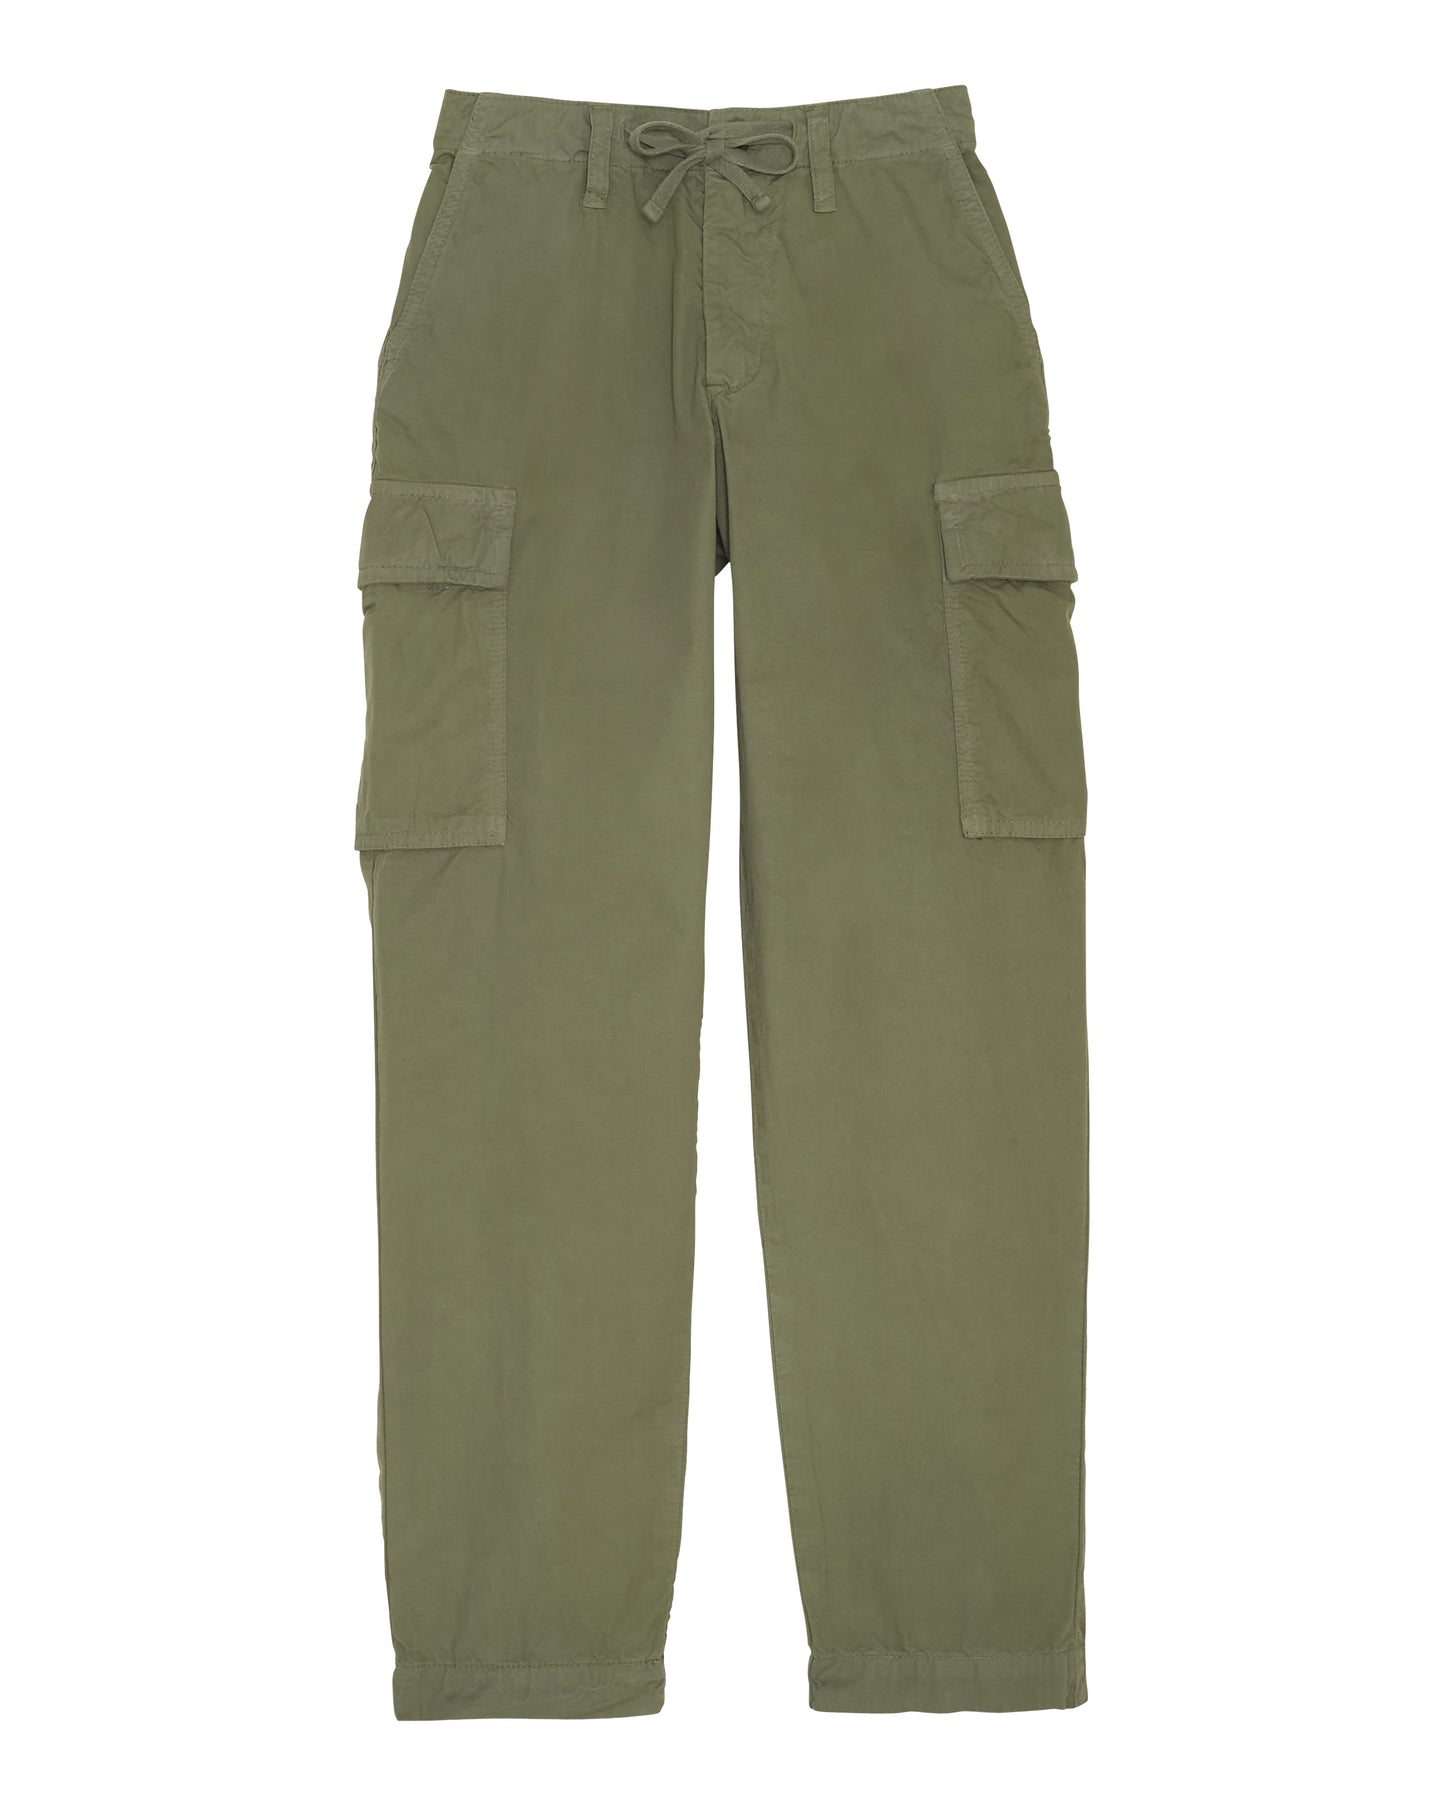 Pantalon Garçon chino Vert militaire Tyl BBPAA121-02